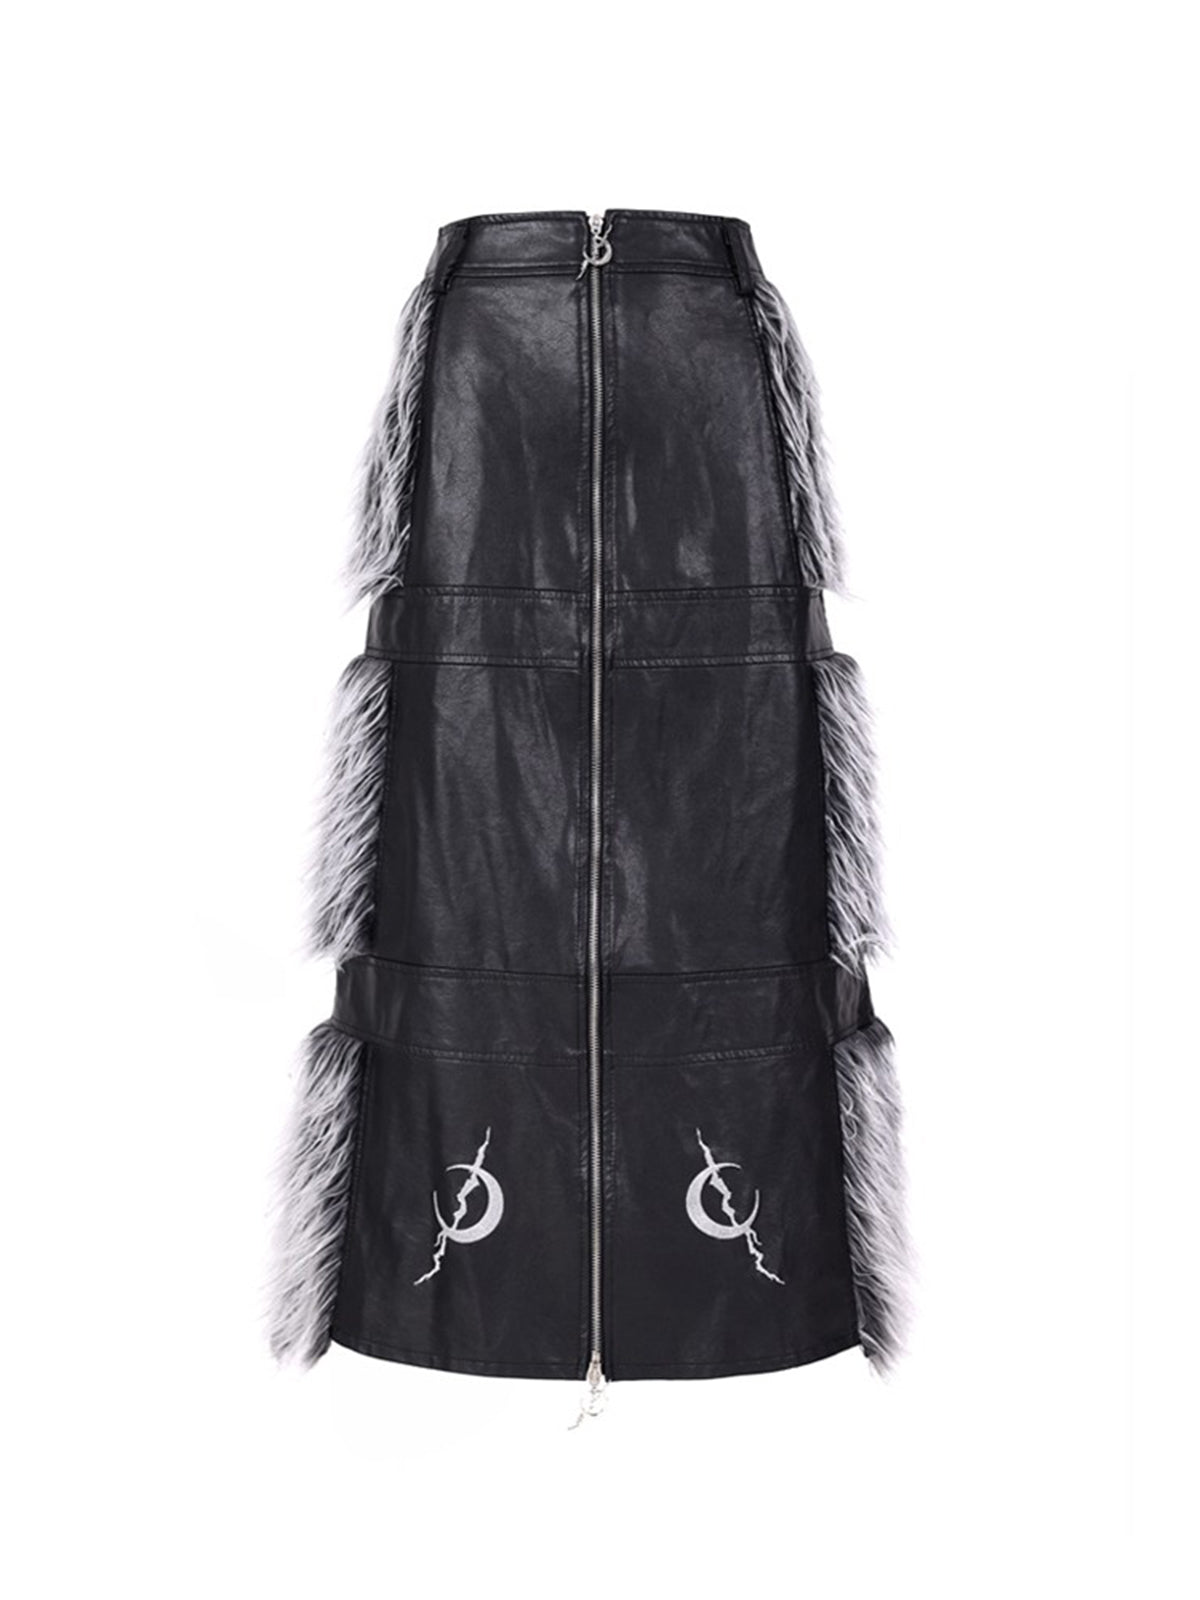 Reversible structured fur skirt